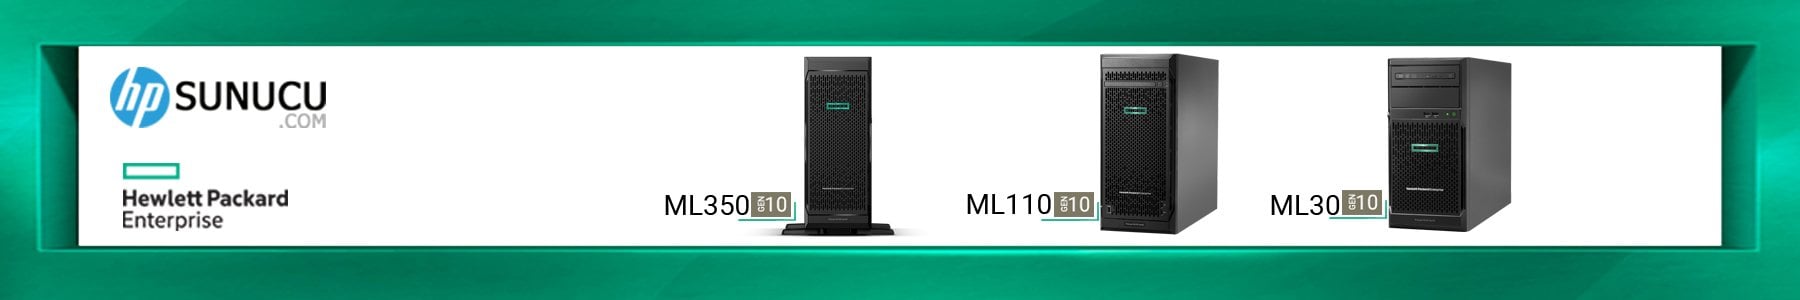 HPE ML30 Gen10 Server